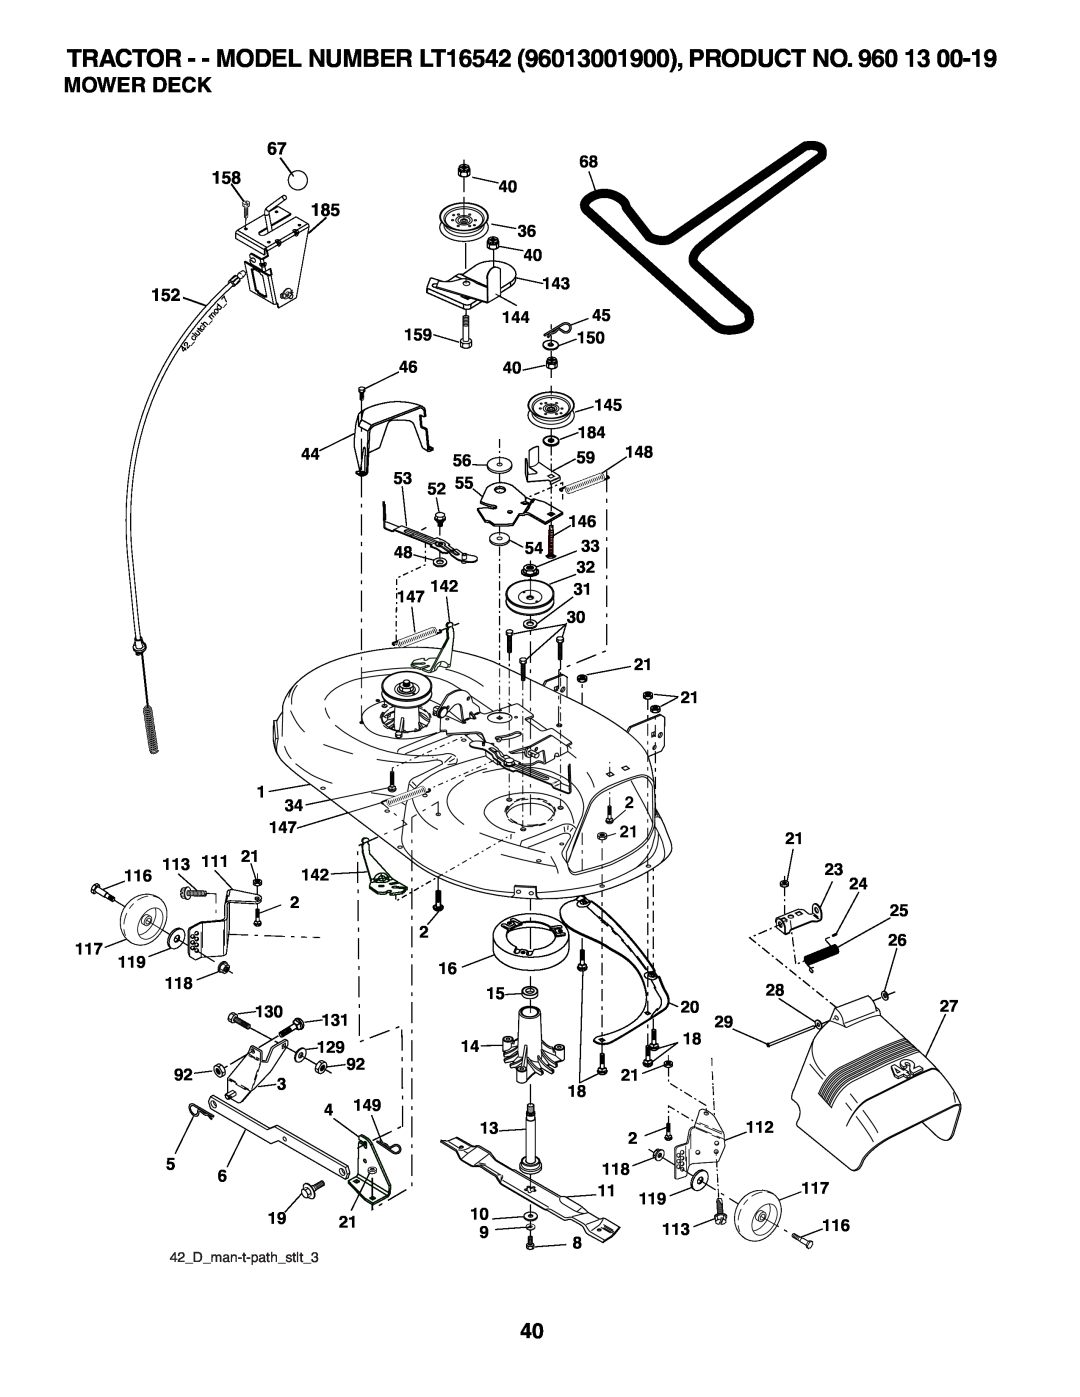 Husqvarna owner manual Mower Deck, TRACTOR - - MODEL NUMBER LT16542 96013001900, PRODUCT NO. 960 13, 42Dman-t-pathstlt3 